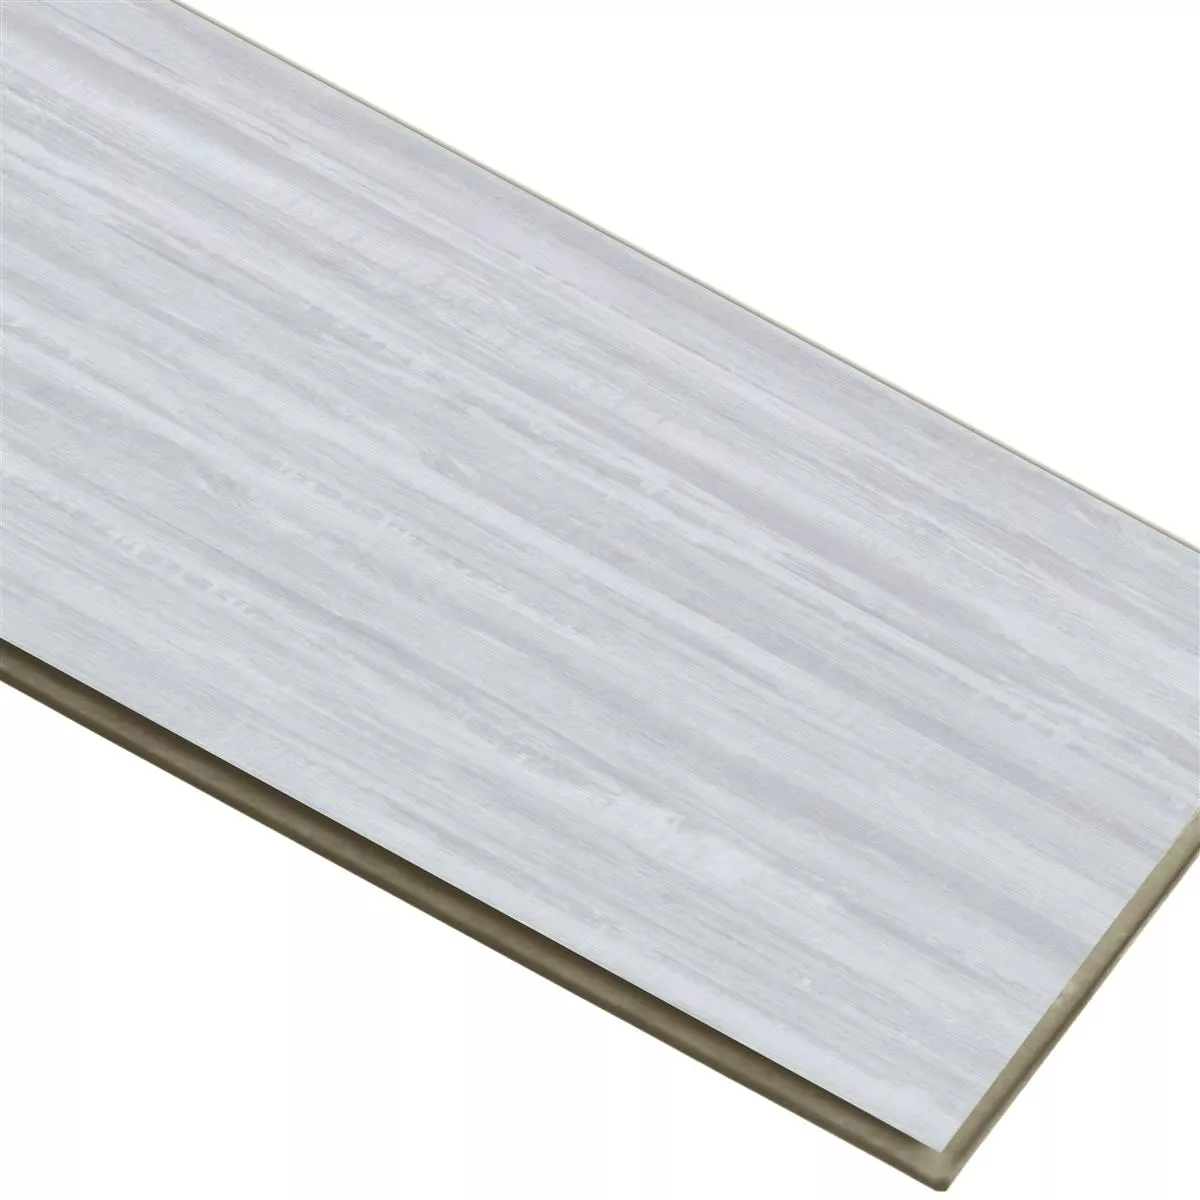 Vinyl Floor Tiles Click System Snowwood White 17,2x121cm